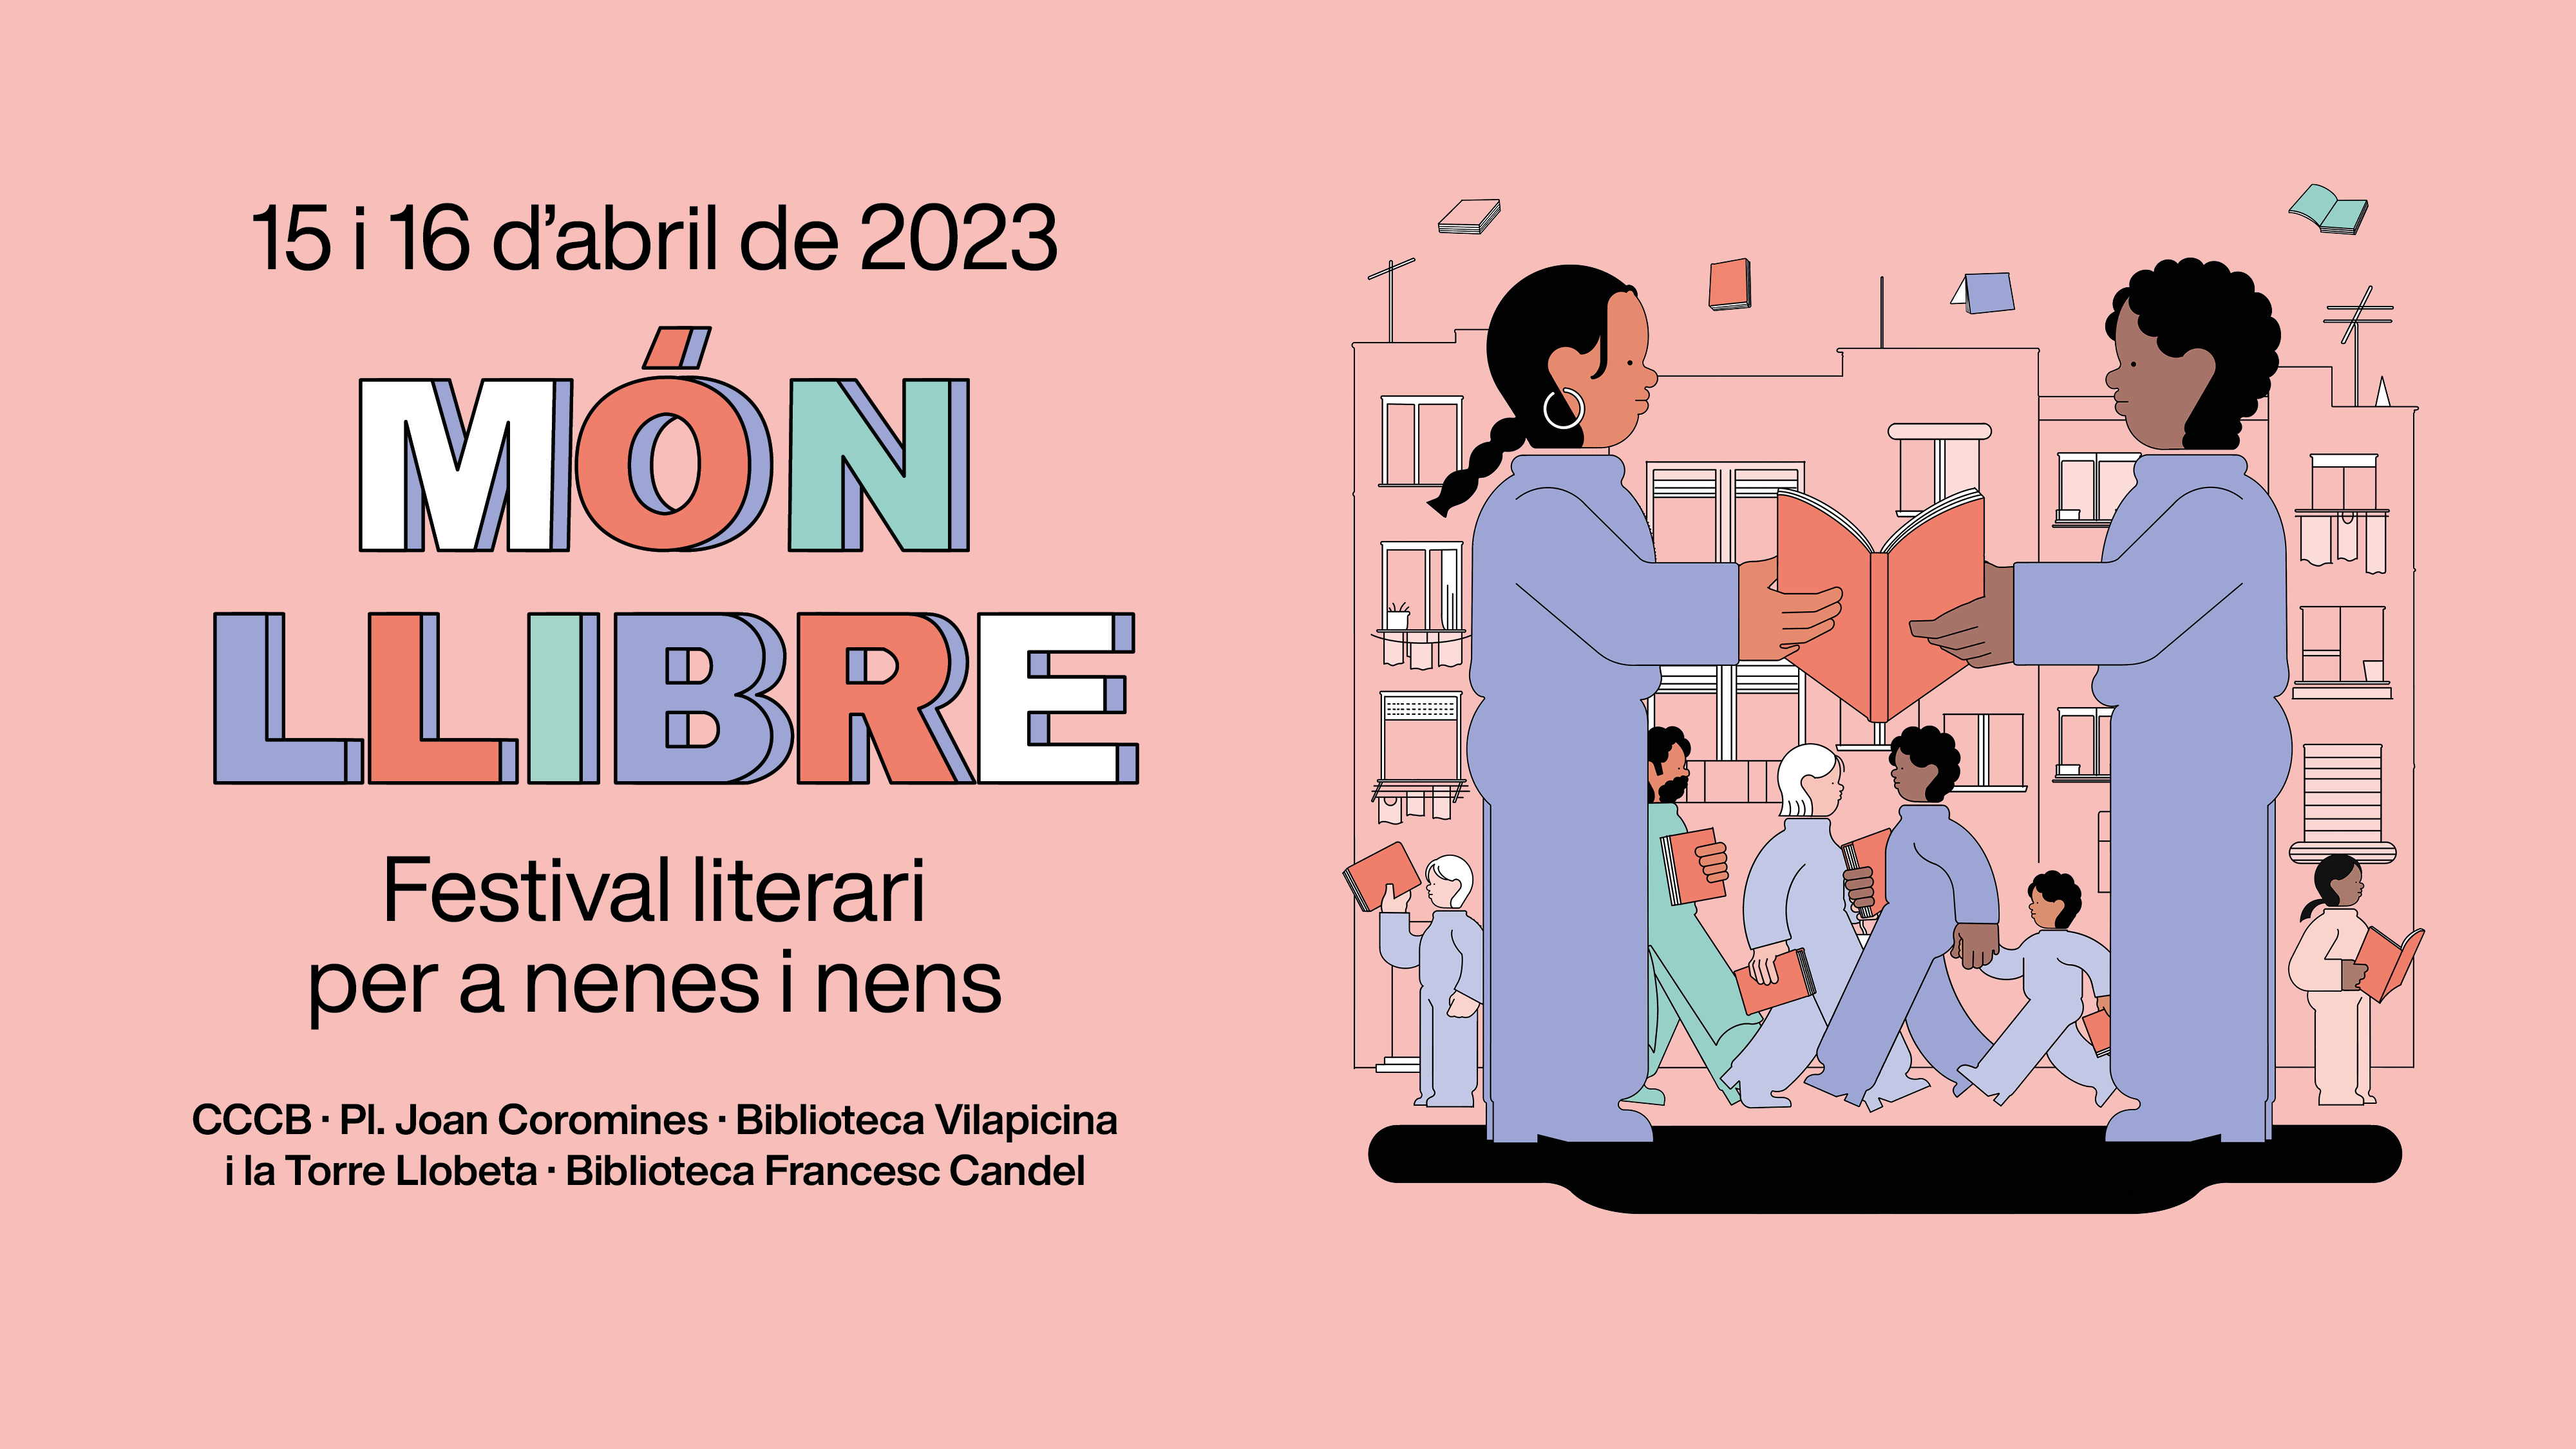 Festival literari per a nenes i nens